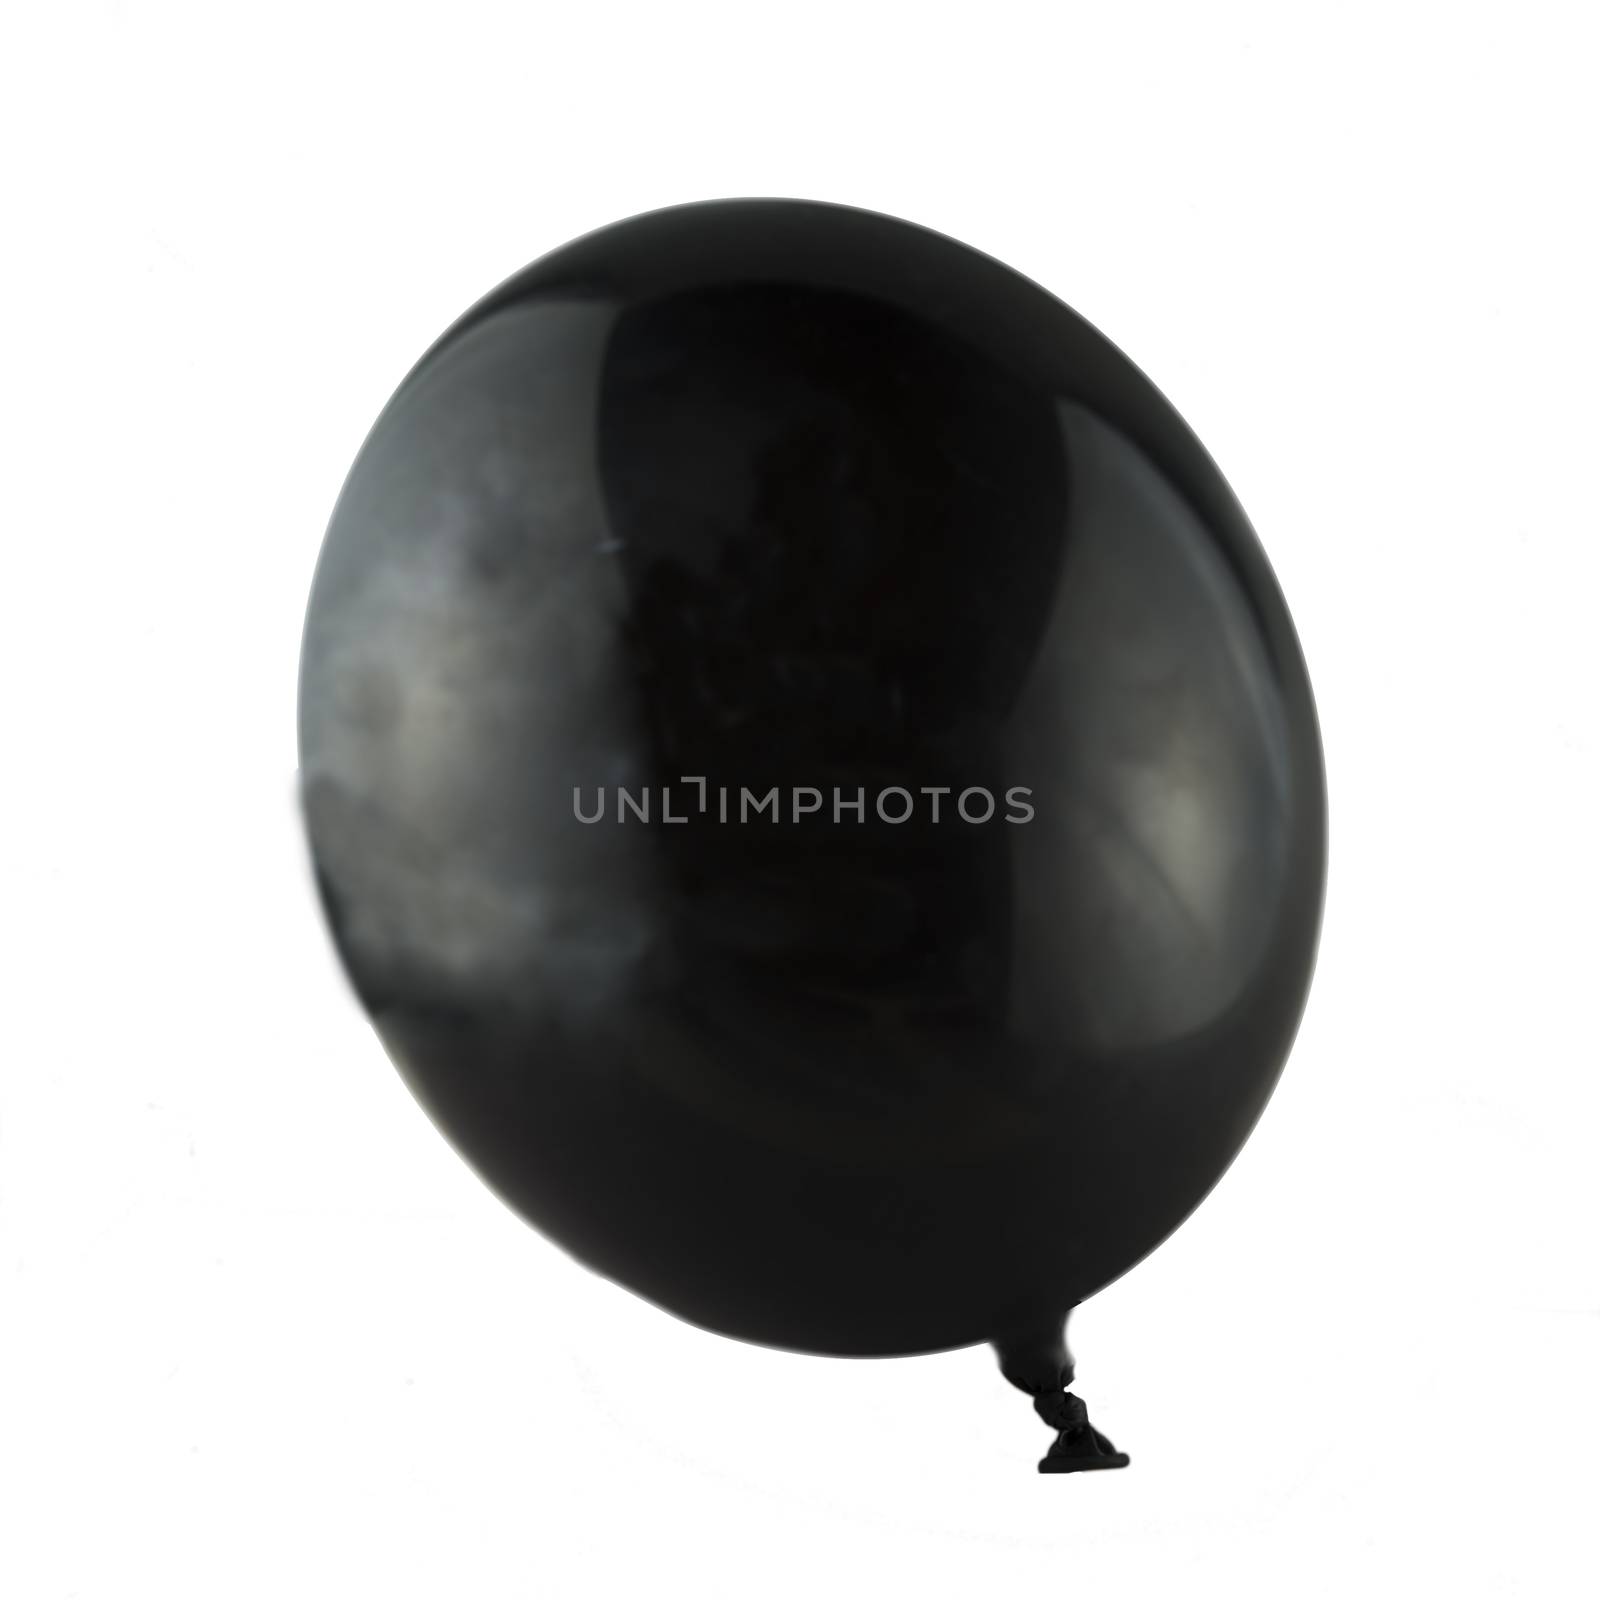 Black balloon by Koufax73